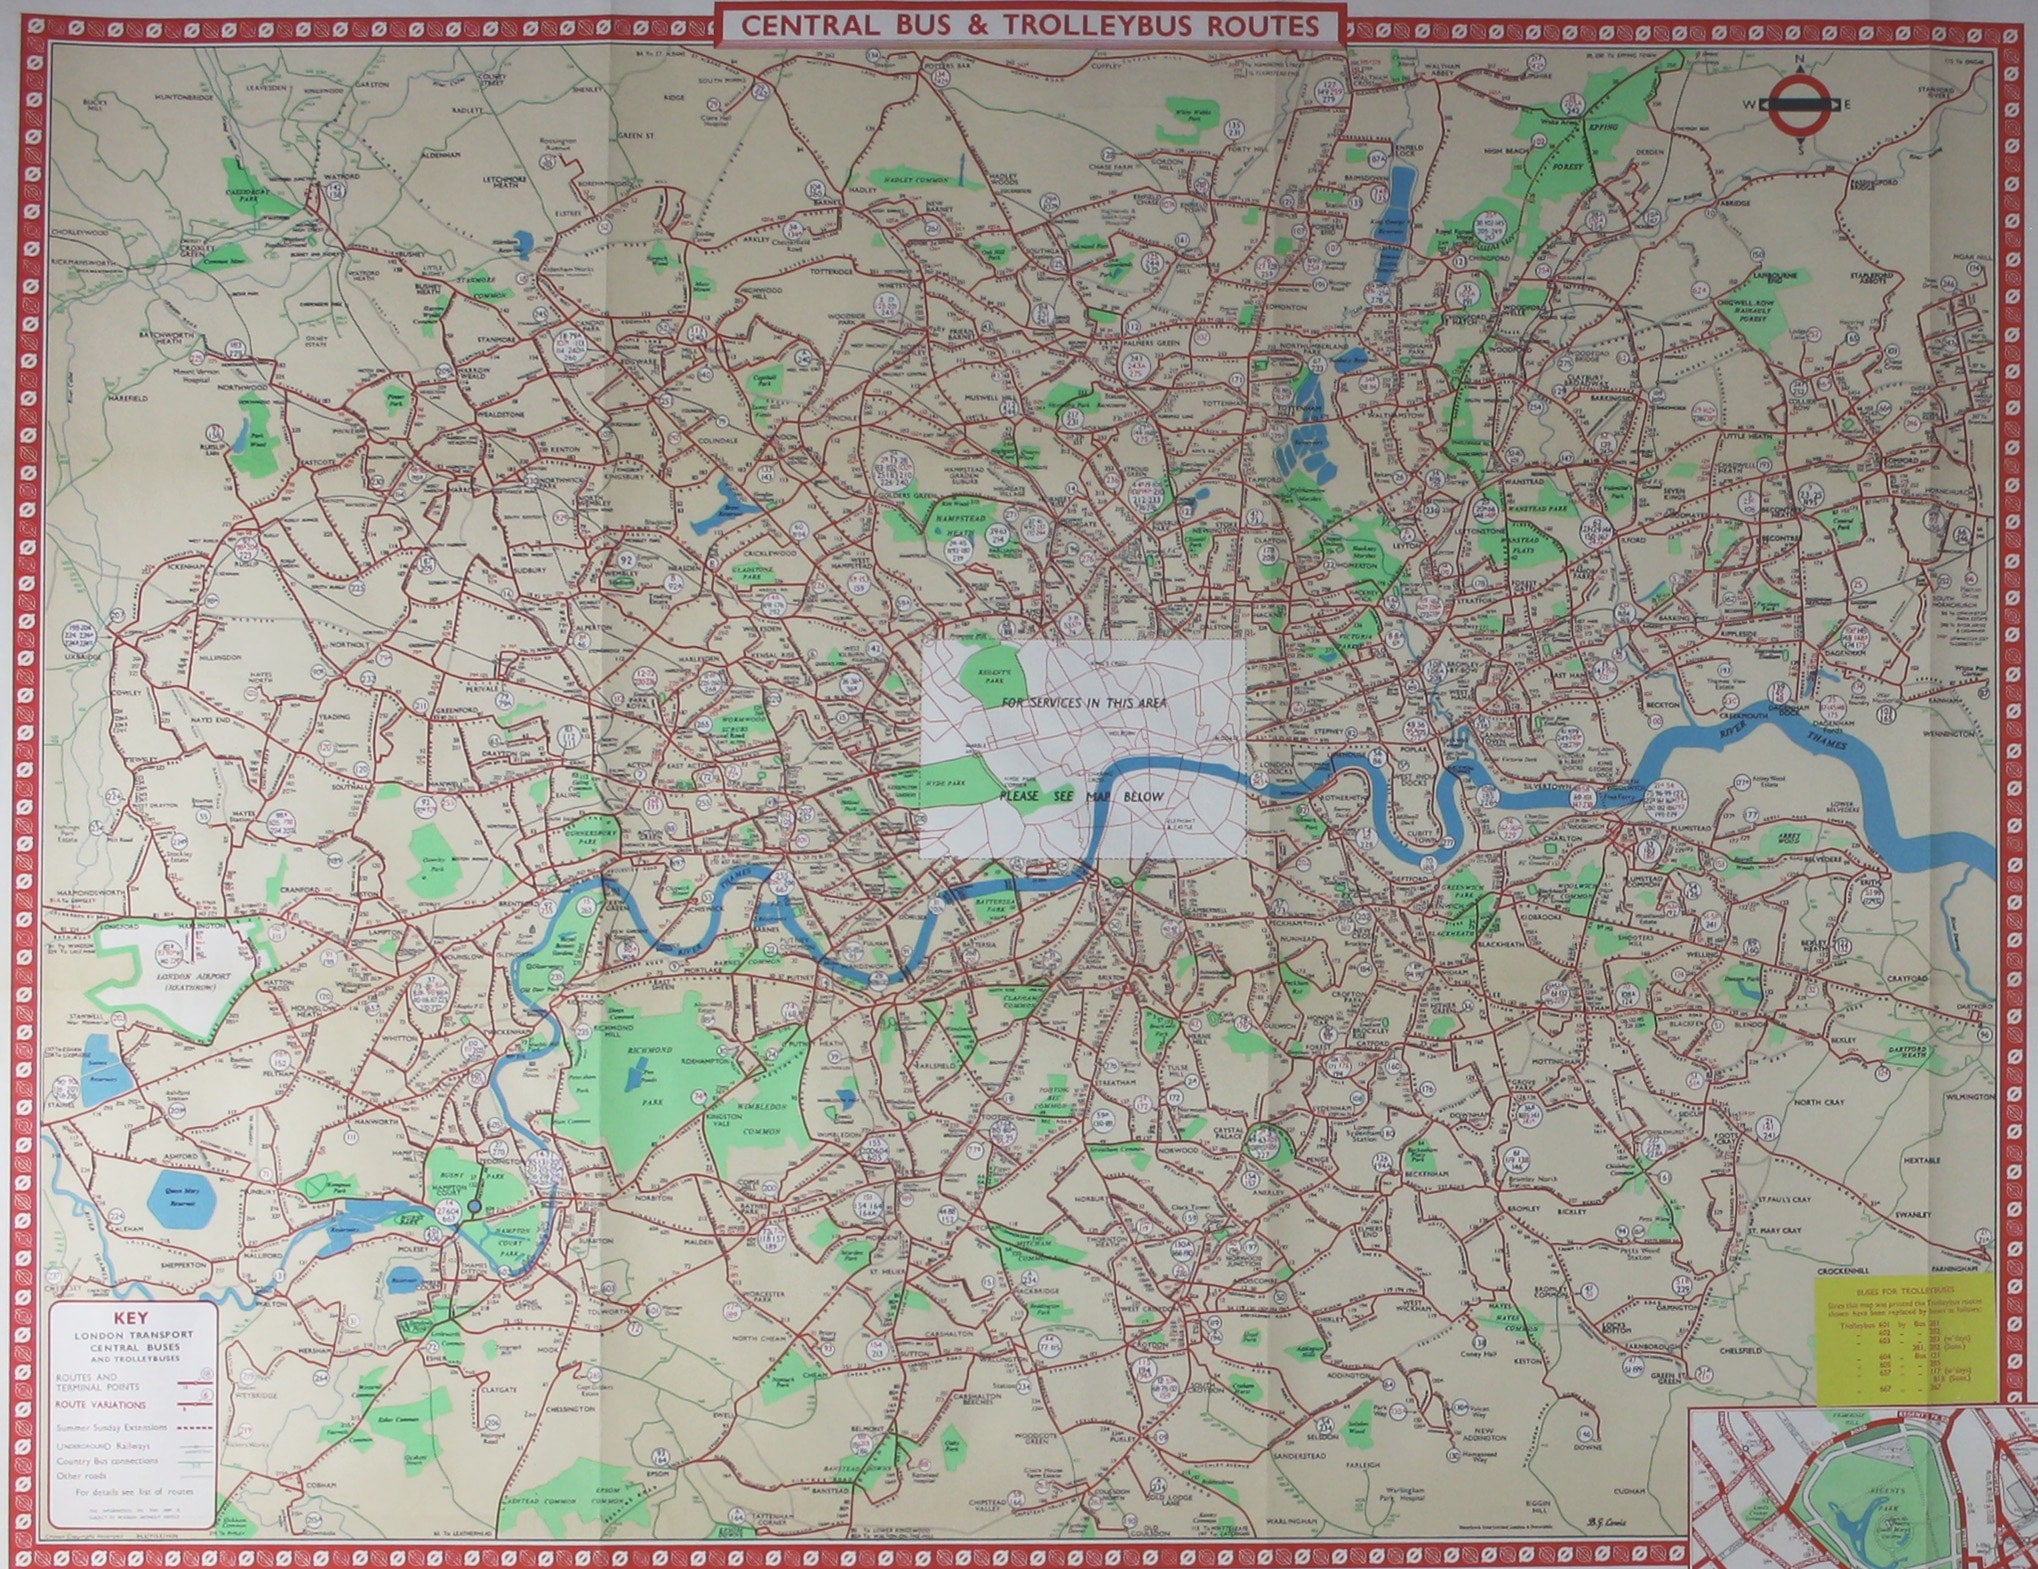 Lewis’ Quad Royal Trolleybus Map of London